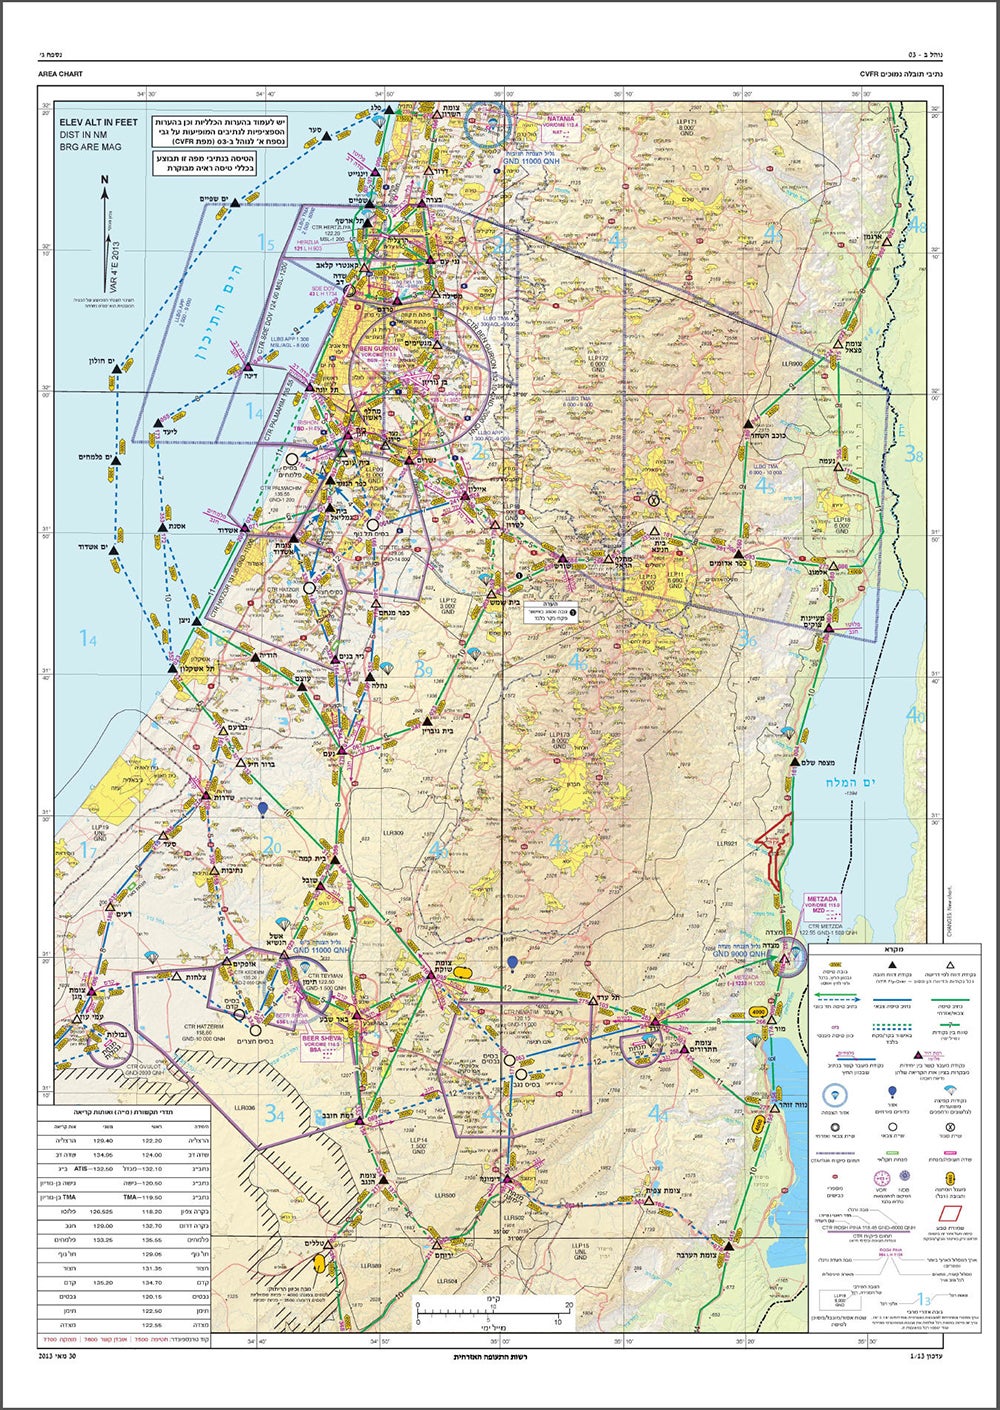 07-vfr-chart-for-northern-israel.jpg